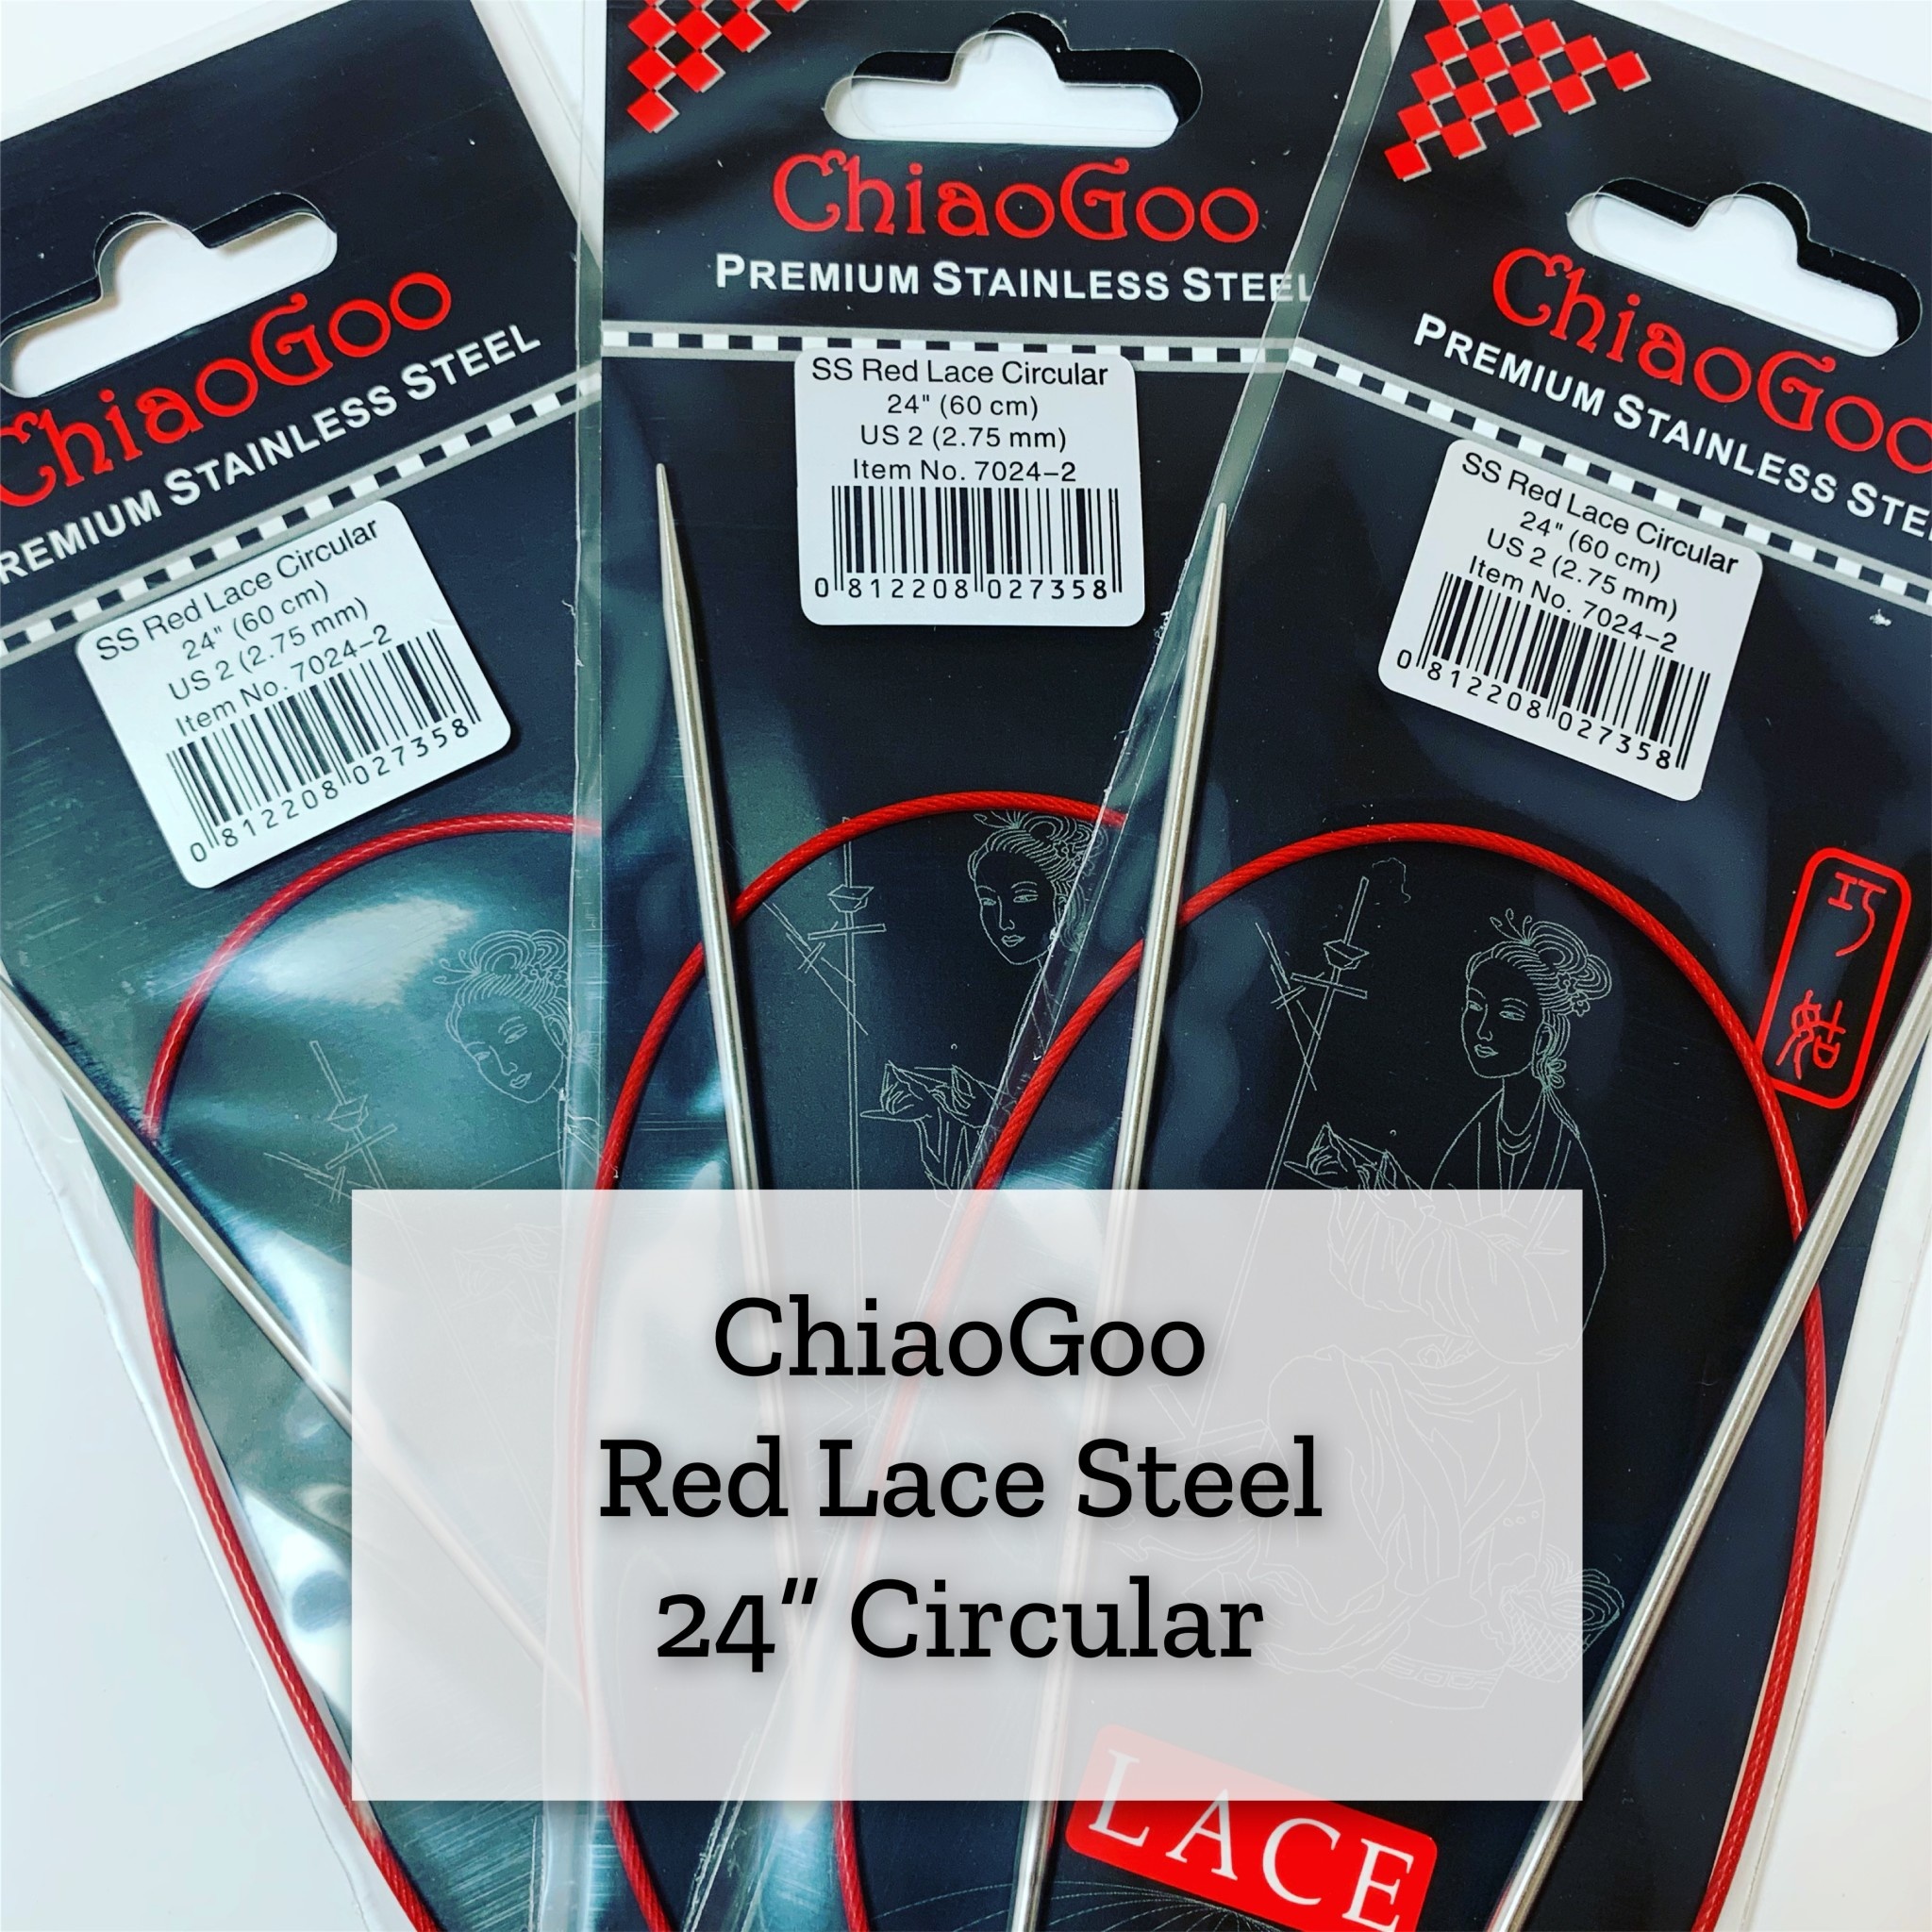 ChiaoGoo Red Lace Steel - 24" 9 mm